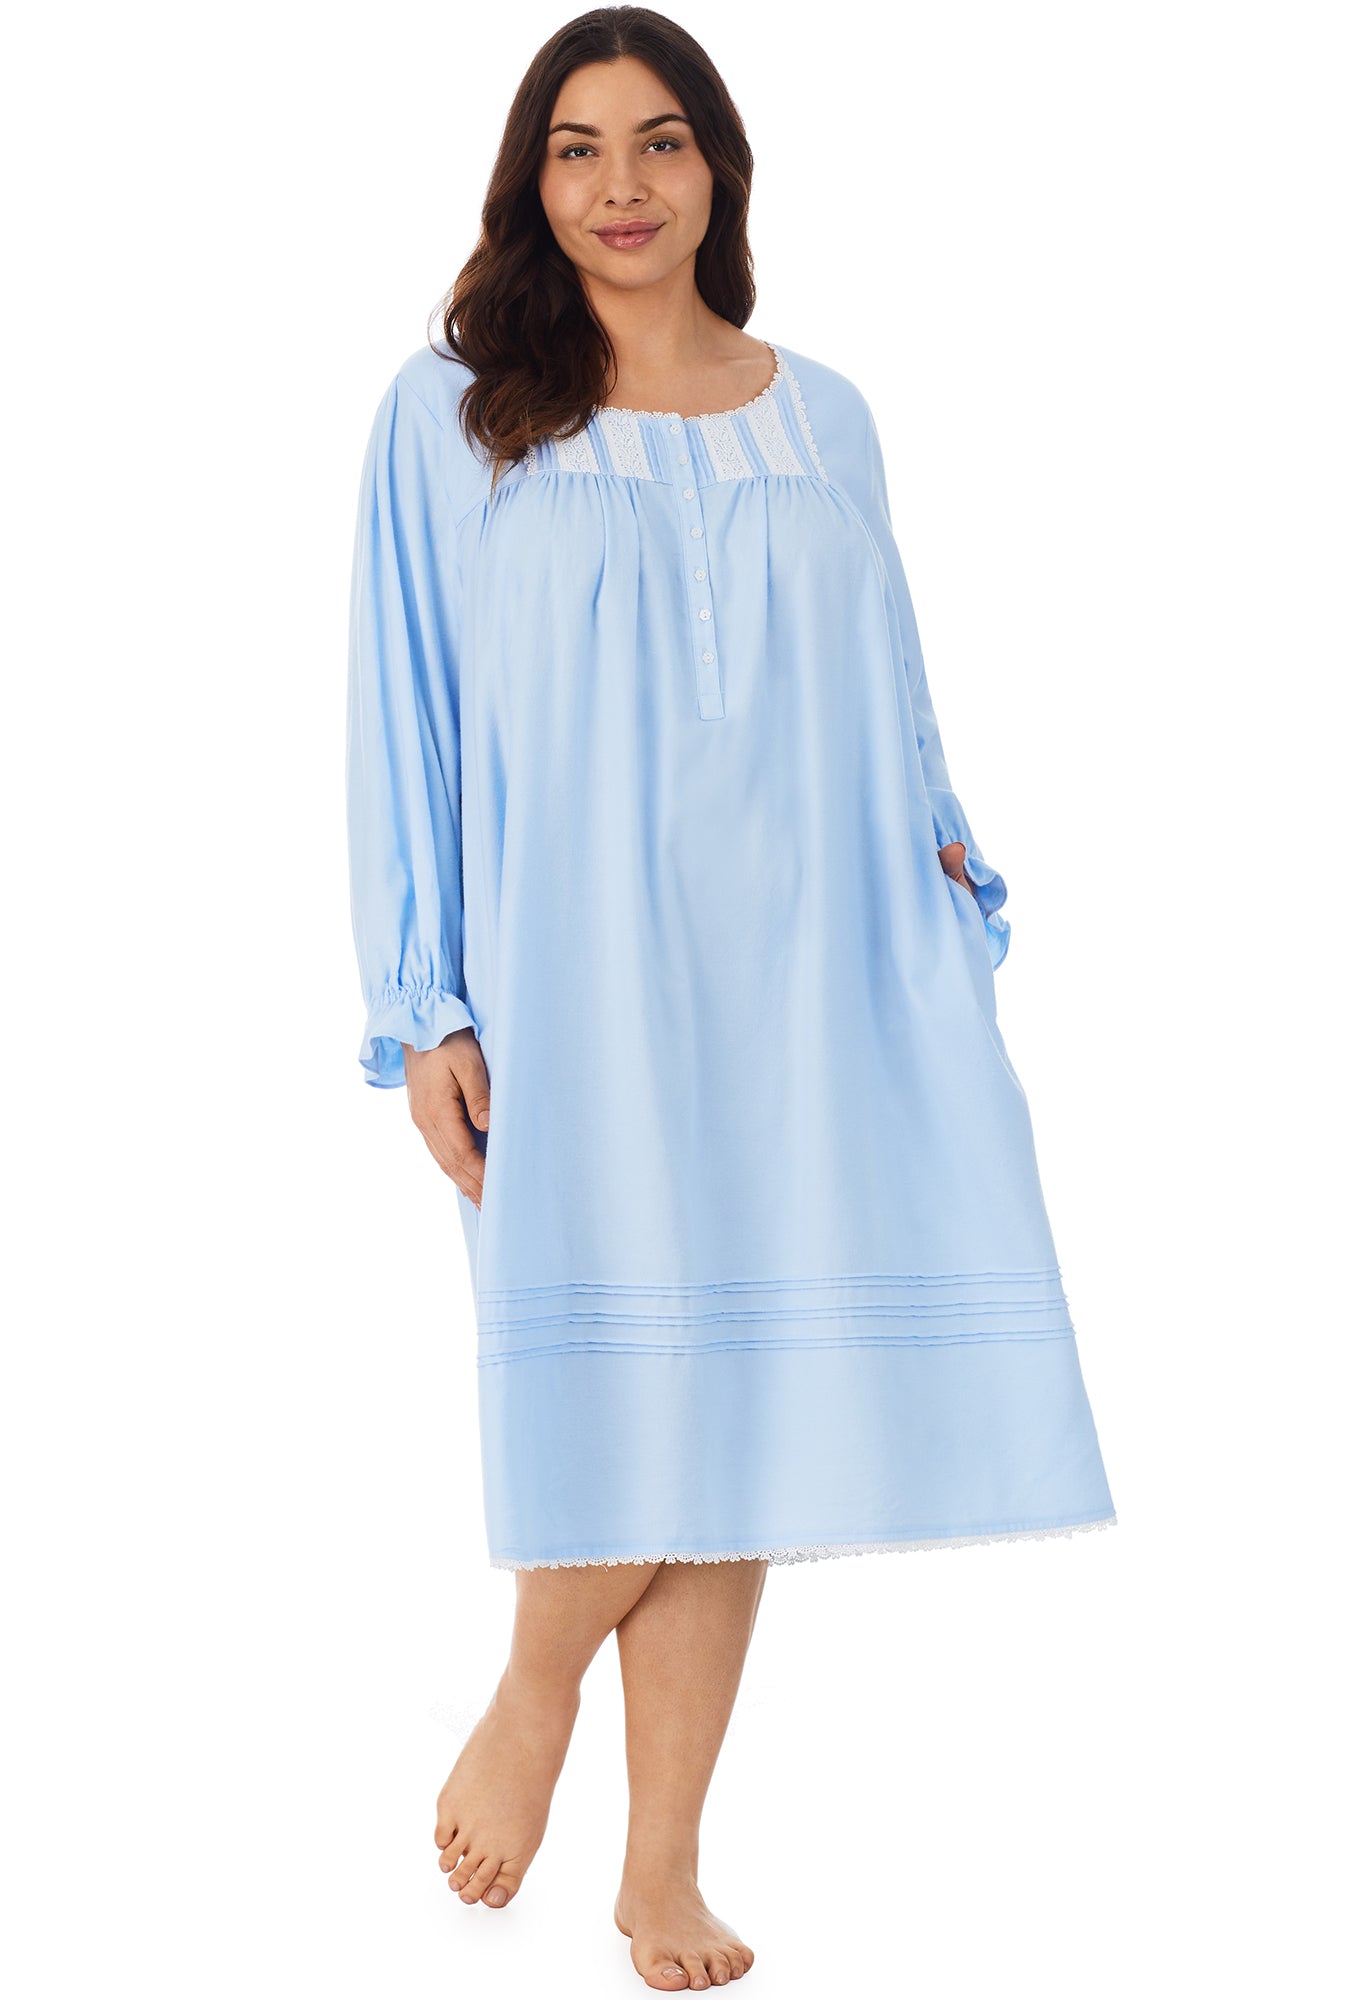 A lady wearing a heavenly blue long sleeve rayon lightweight flannel waltz nightgown.